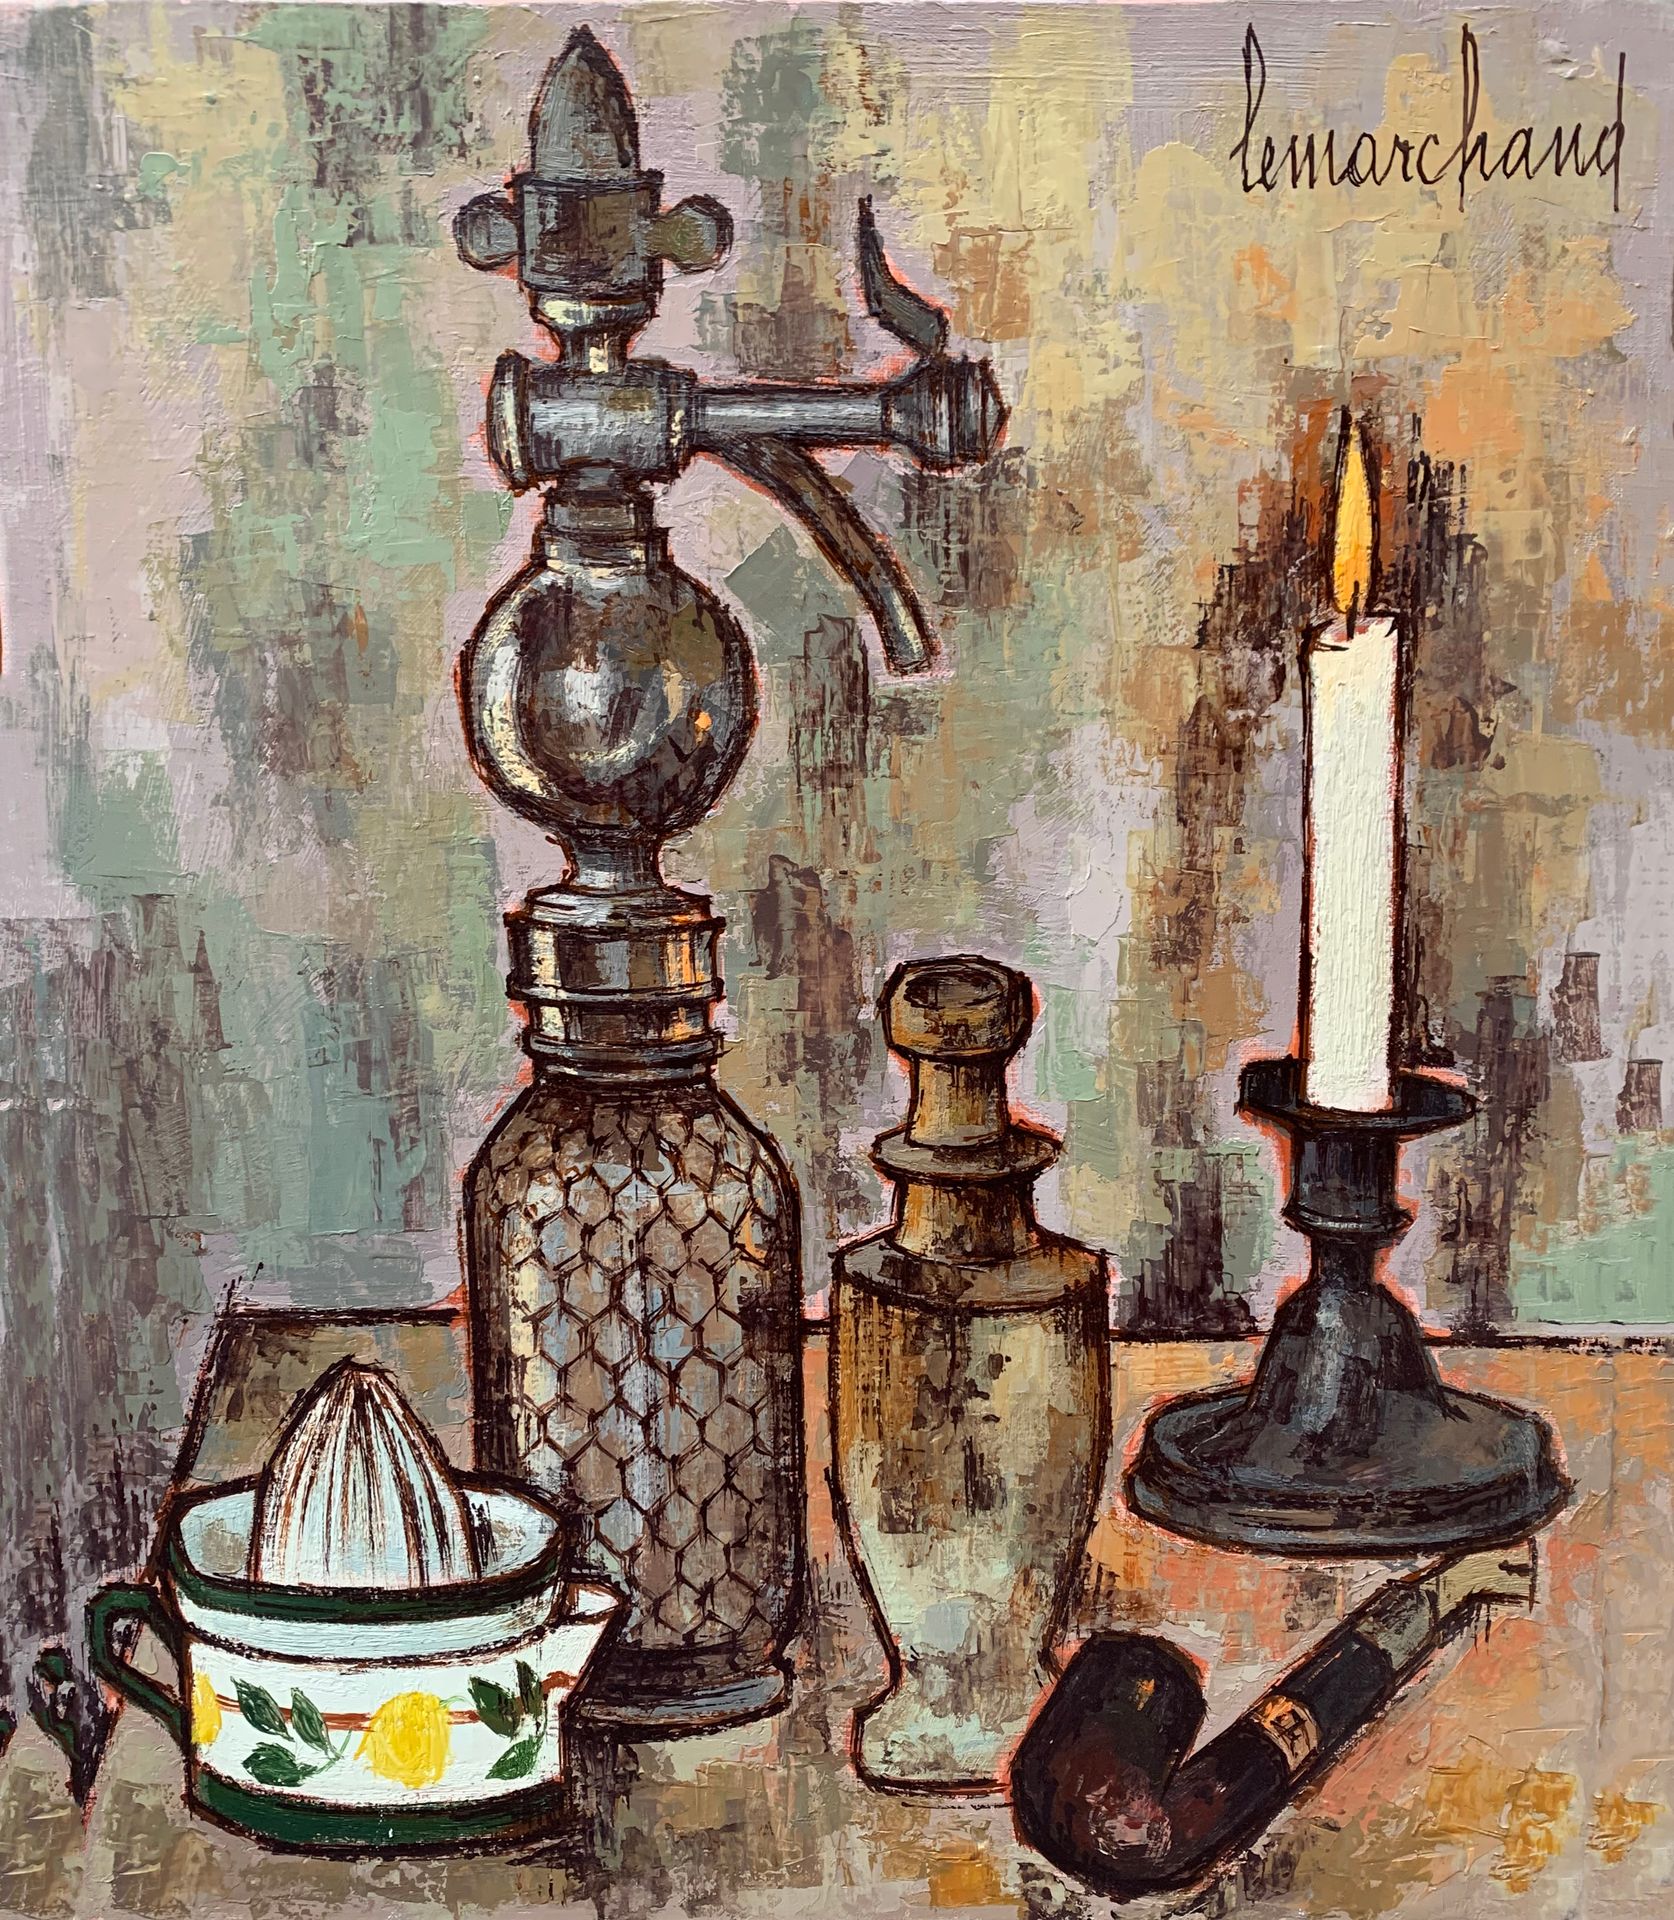 Null 皮埃尔-莱马赫德 (1906-1970)

静物与虹吸管和蜡烛

右上角有签名的布面油画

55 x 46厘米。